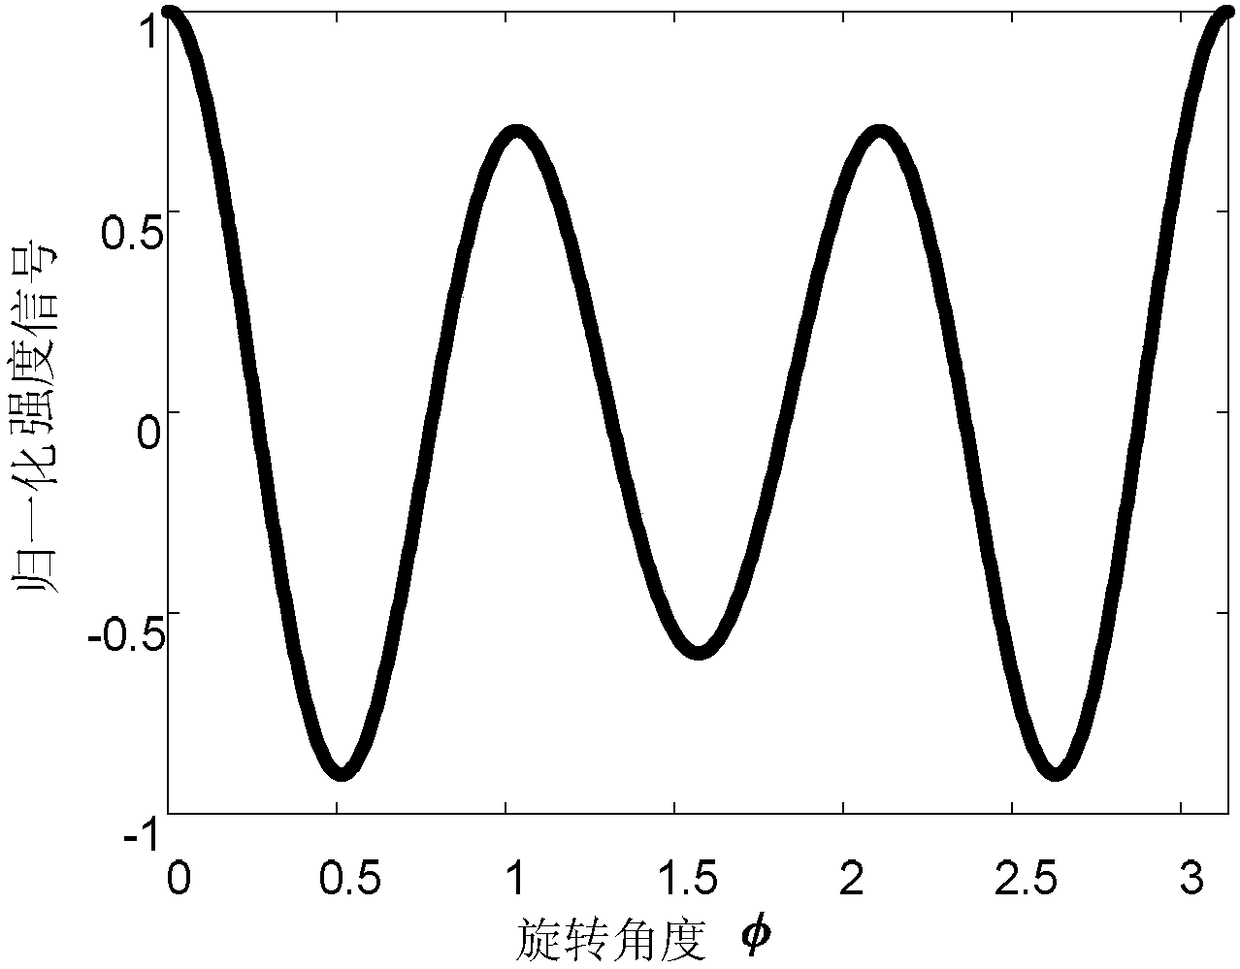 Photonic orbital angular momentum spiral spectrum measurement system based on Fourier transform